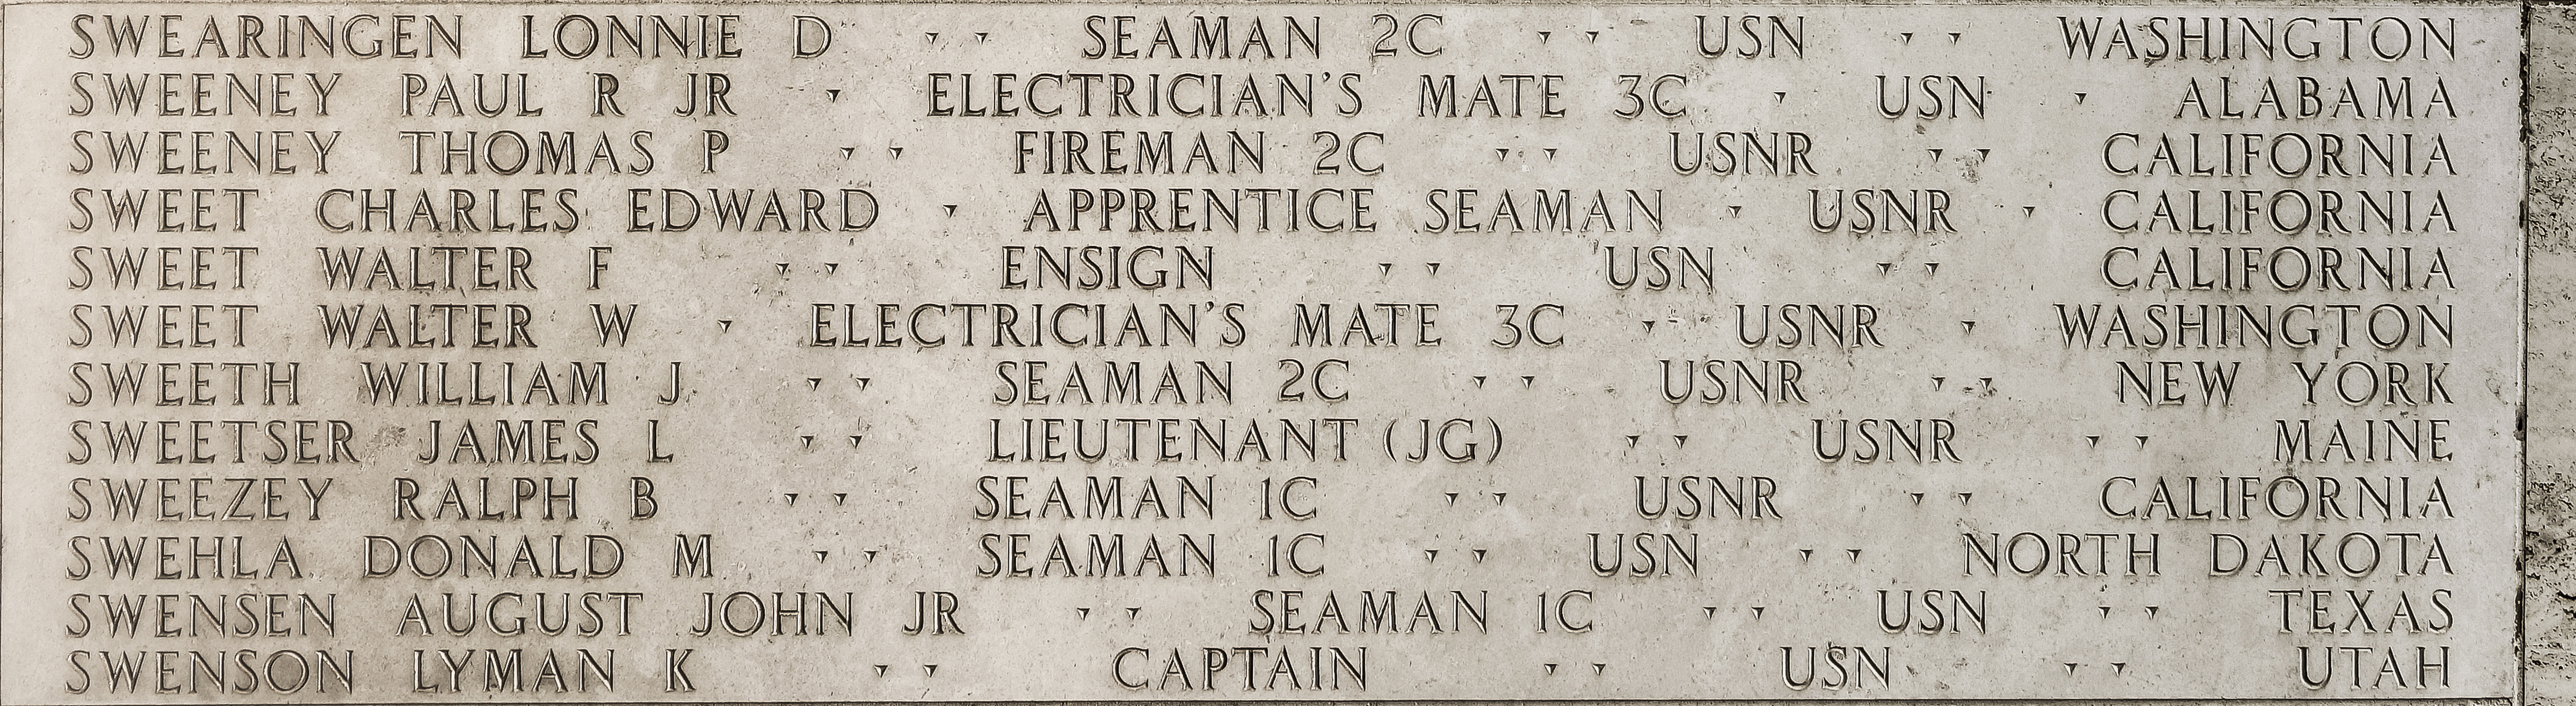 Charles Edward Sweet, Apprentice Seaman